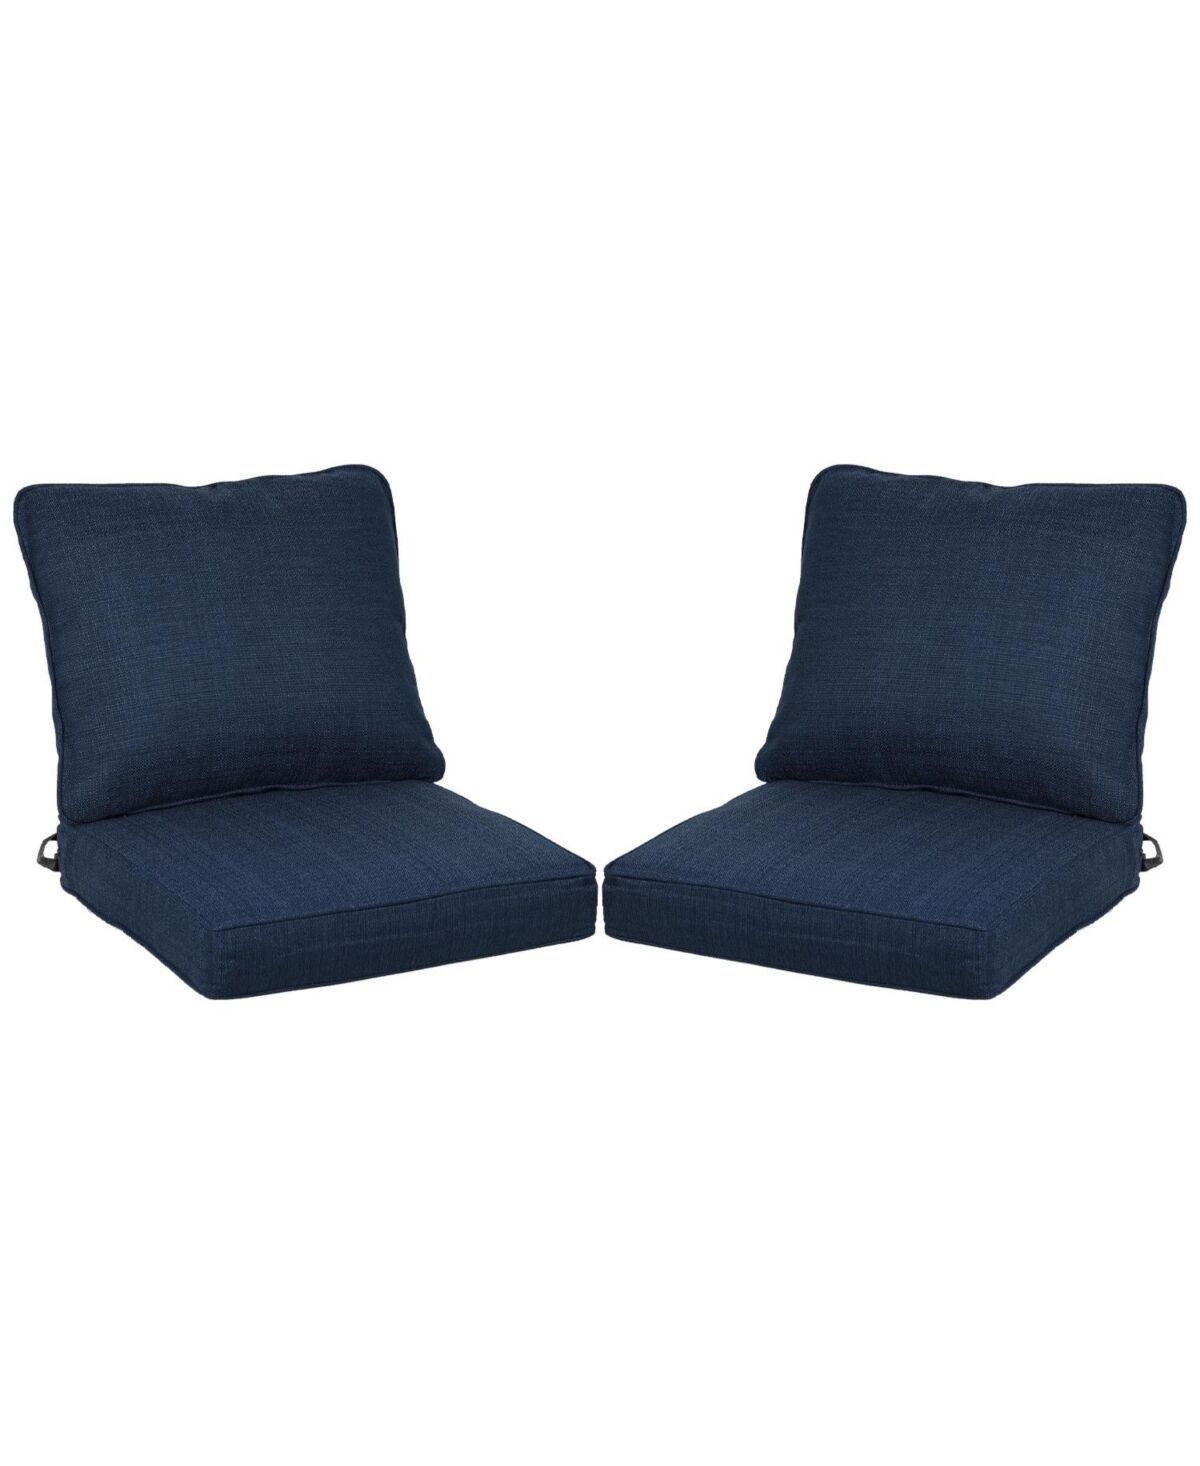 Aoodor 24.4''x23.2'' Outdoor Patio Deep Seating Cushion Set with Storage Bag Single Chair Sofa Seat/Back Cushion- Set of 2 - Light blue